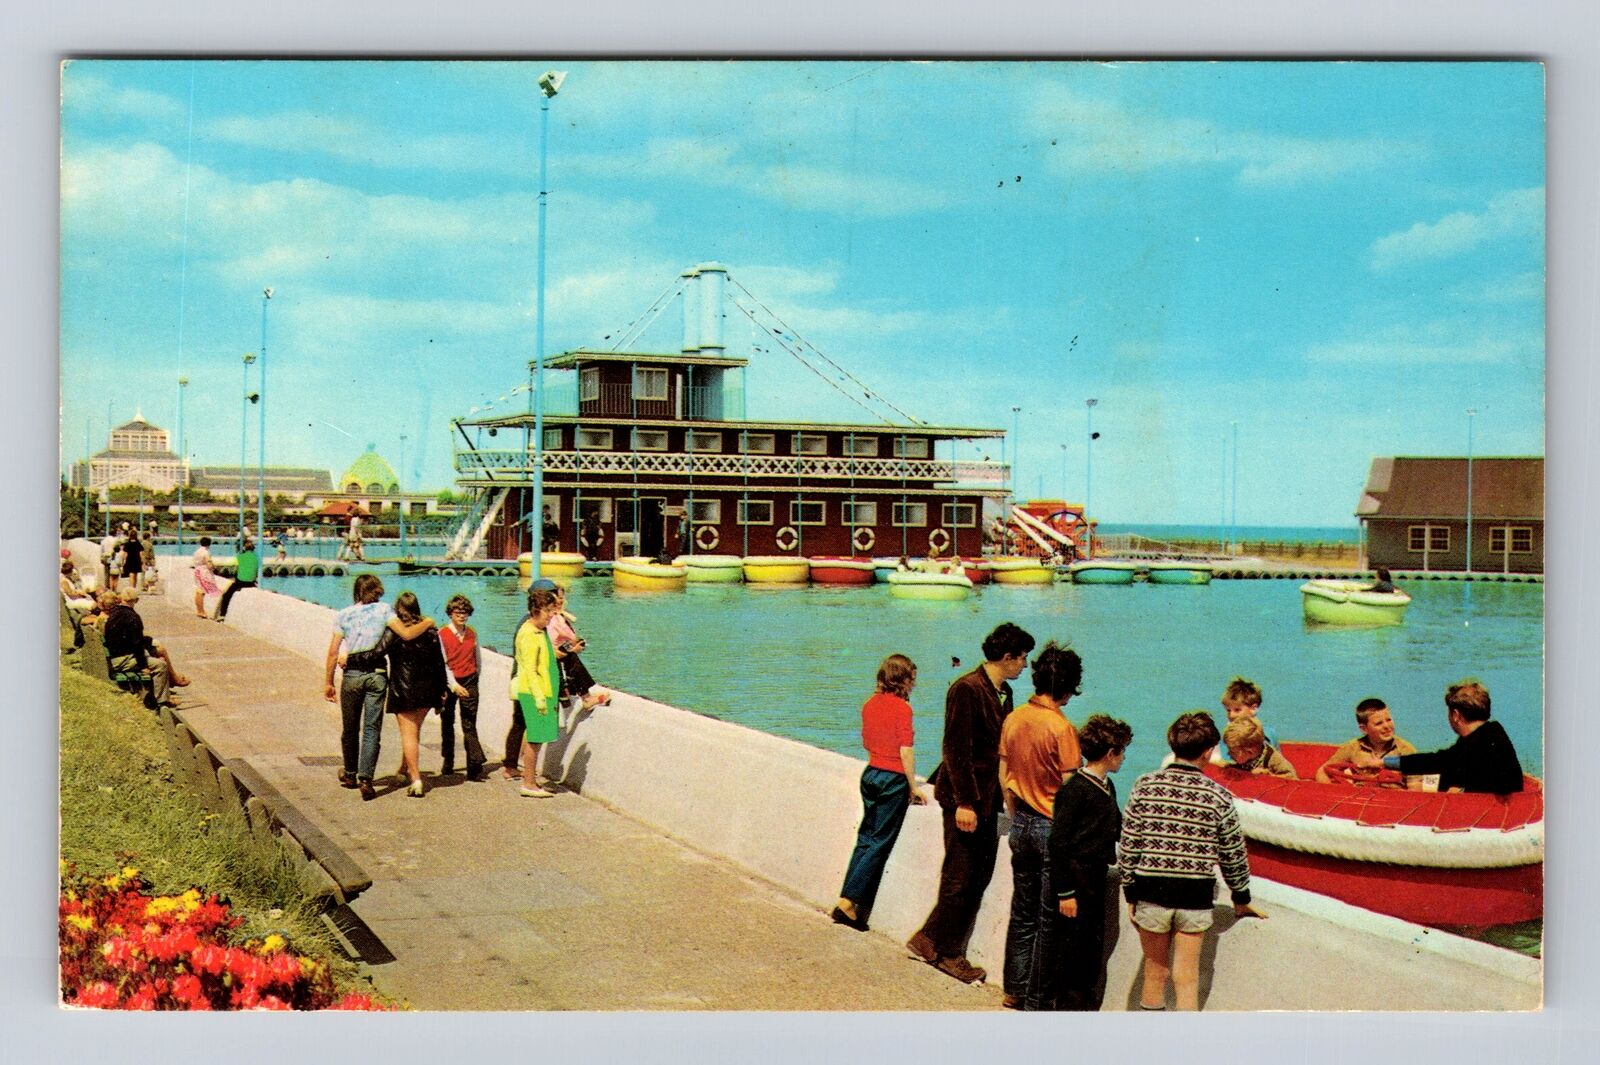 Yarmouth England, South Boating Lake, Antique, Vintage Souvenir Postcard